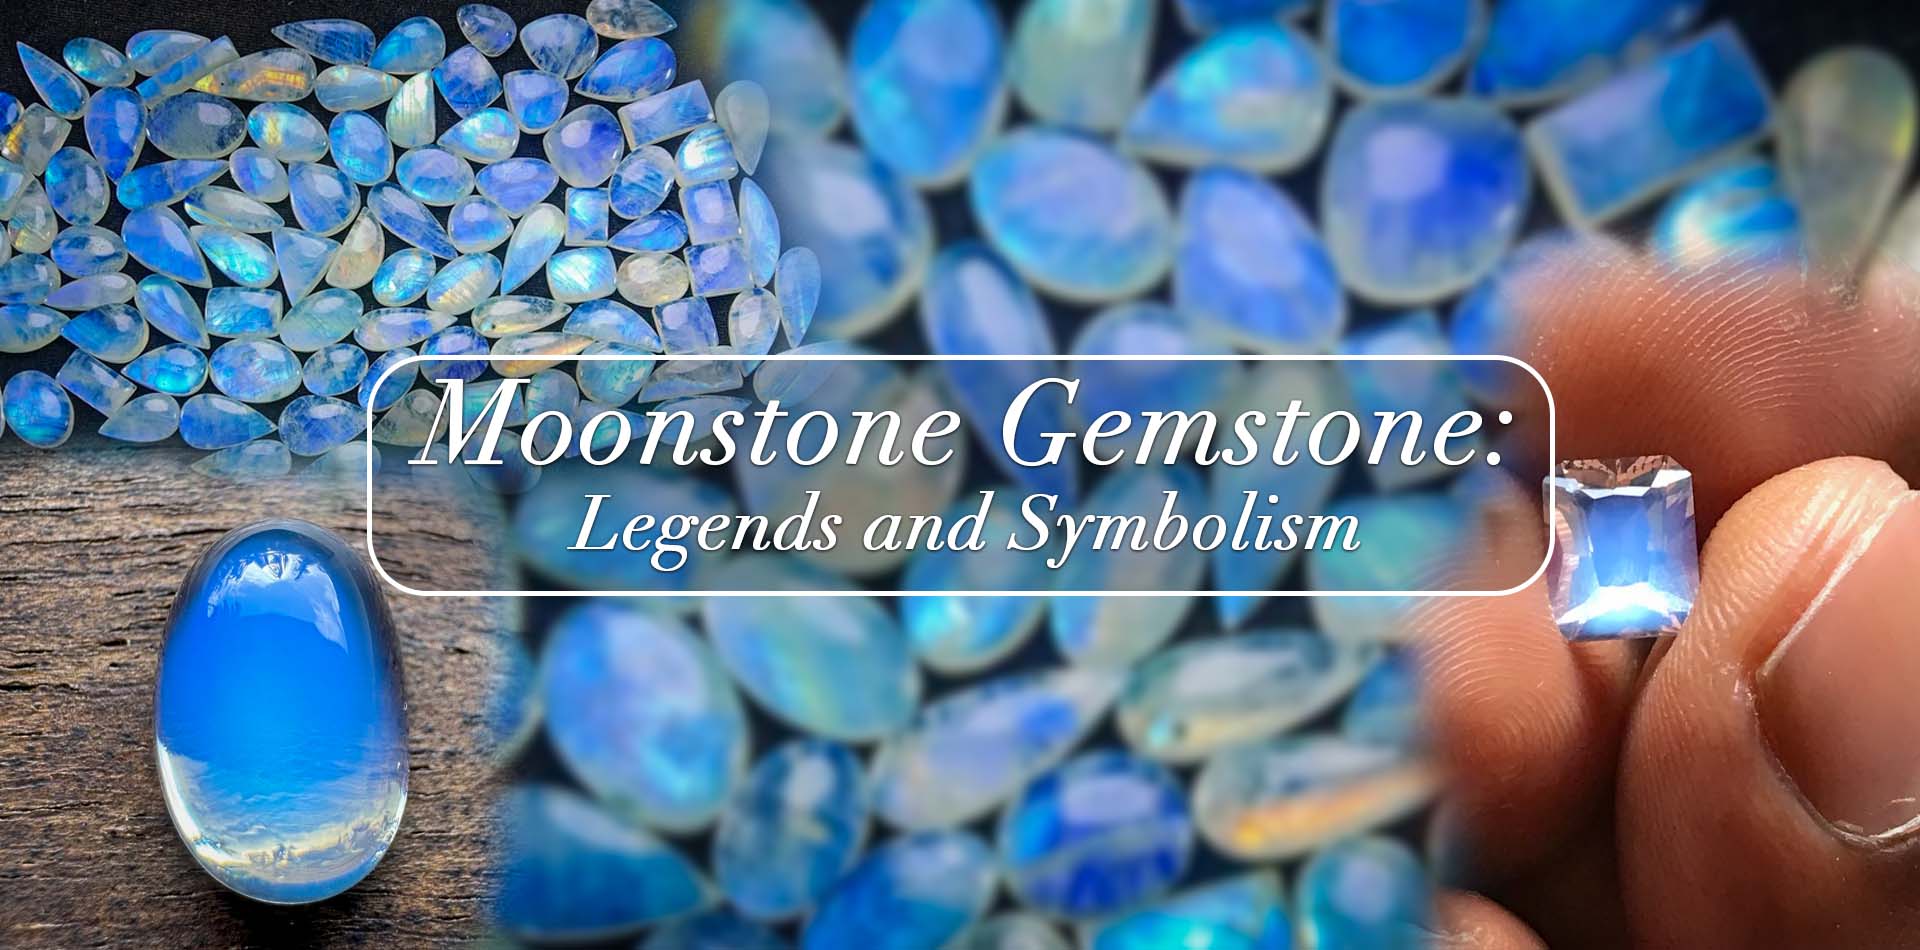 Moonstone Gemstone: Legends and Symbolism